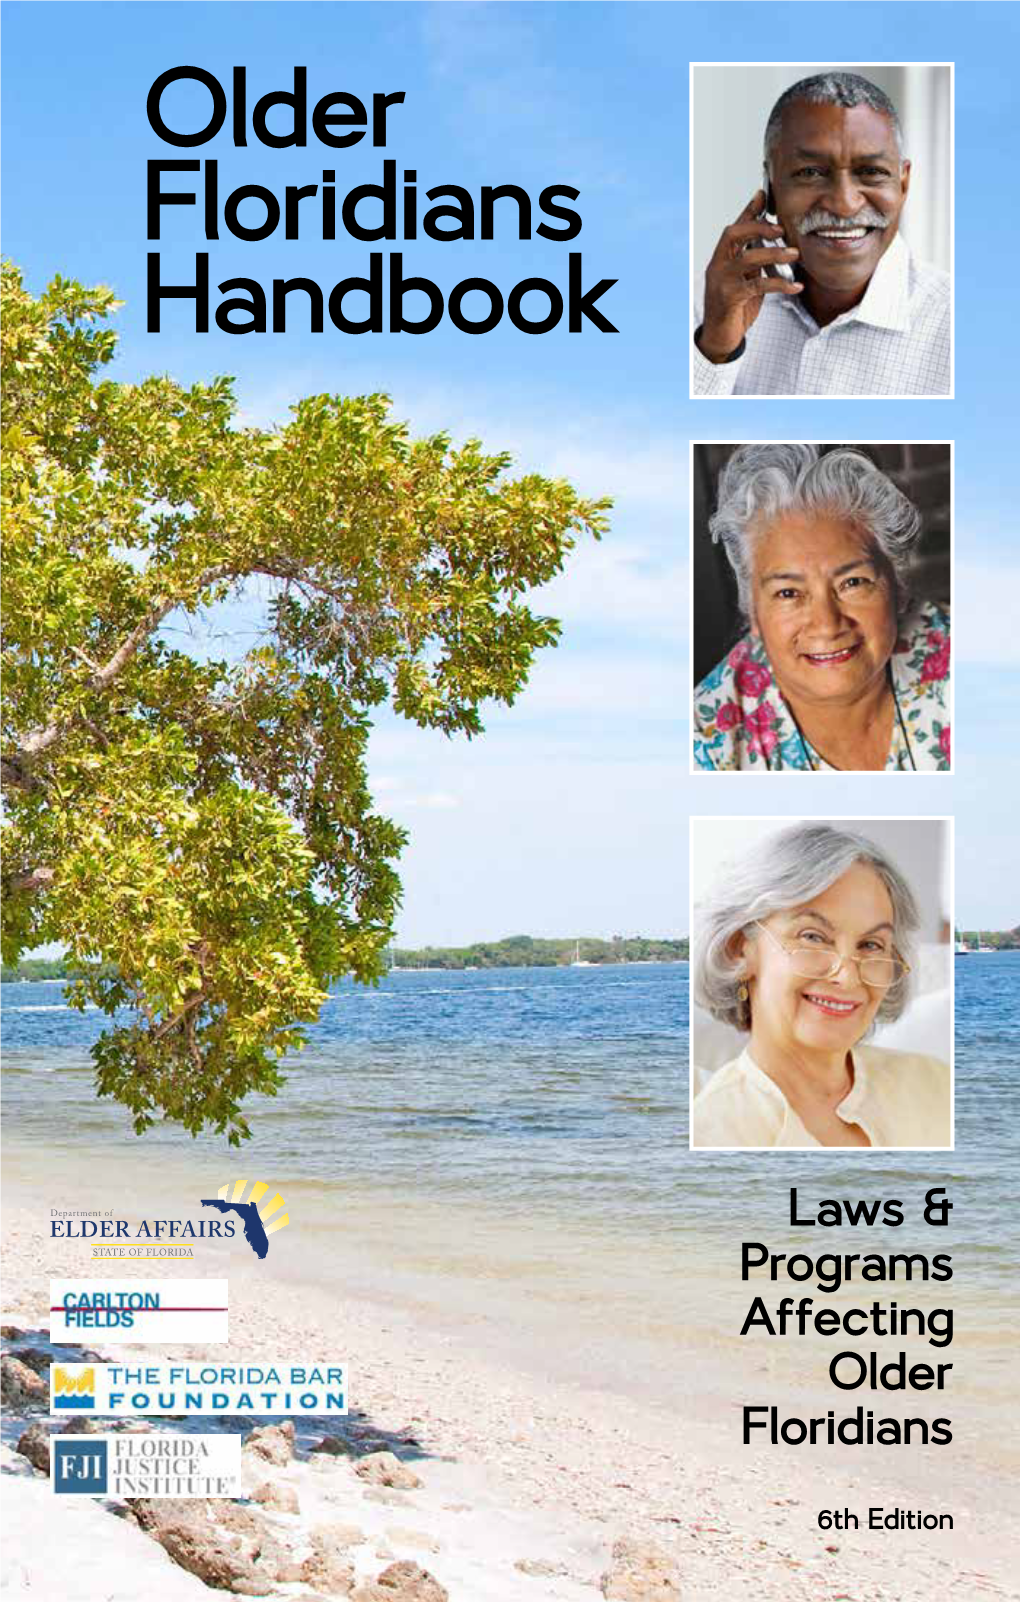 Laws & Programs Affecting Older Floridians